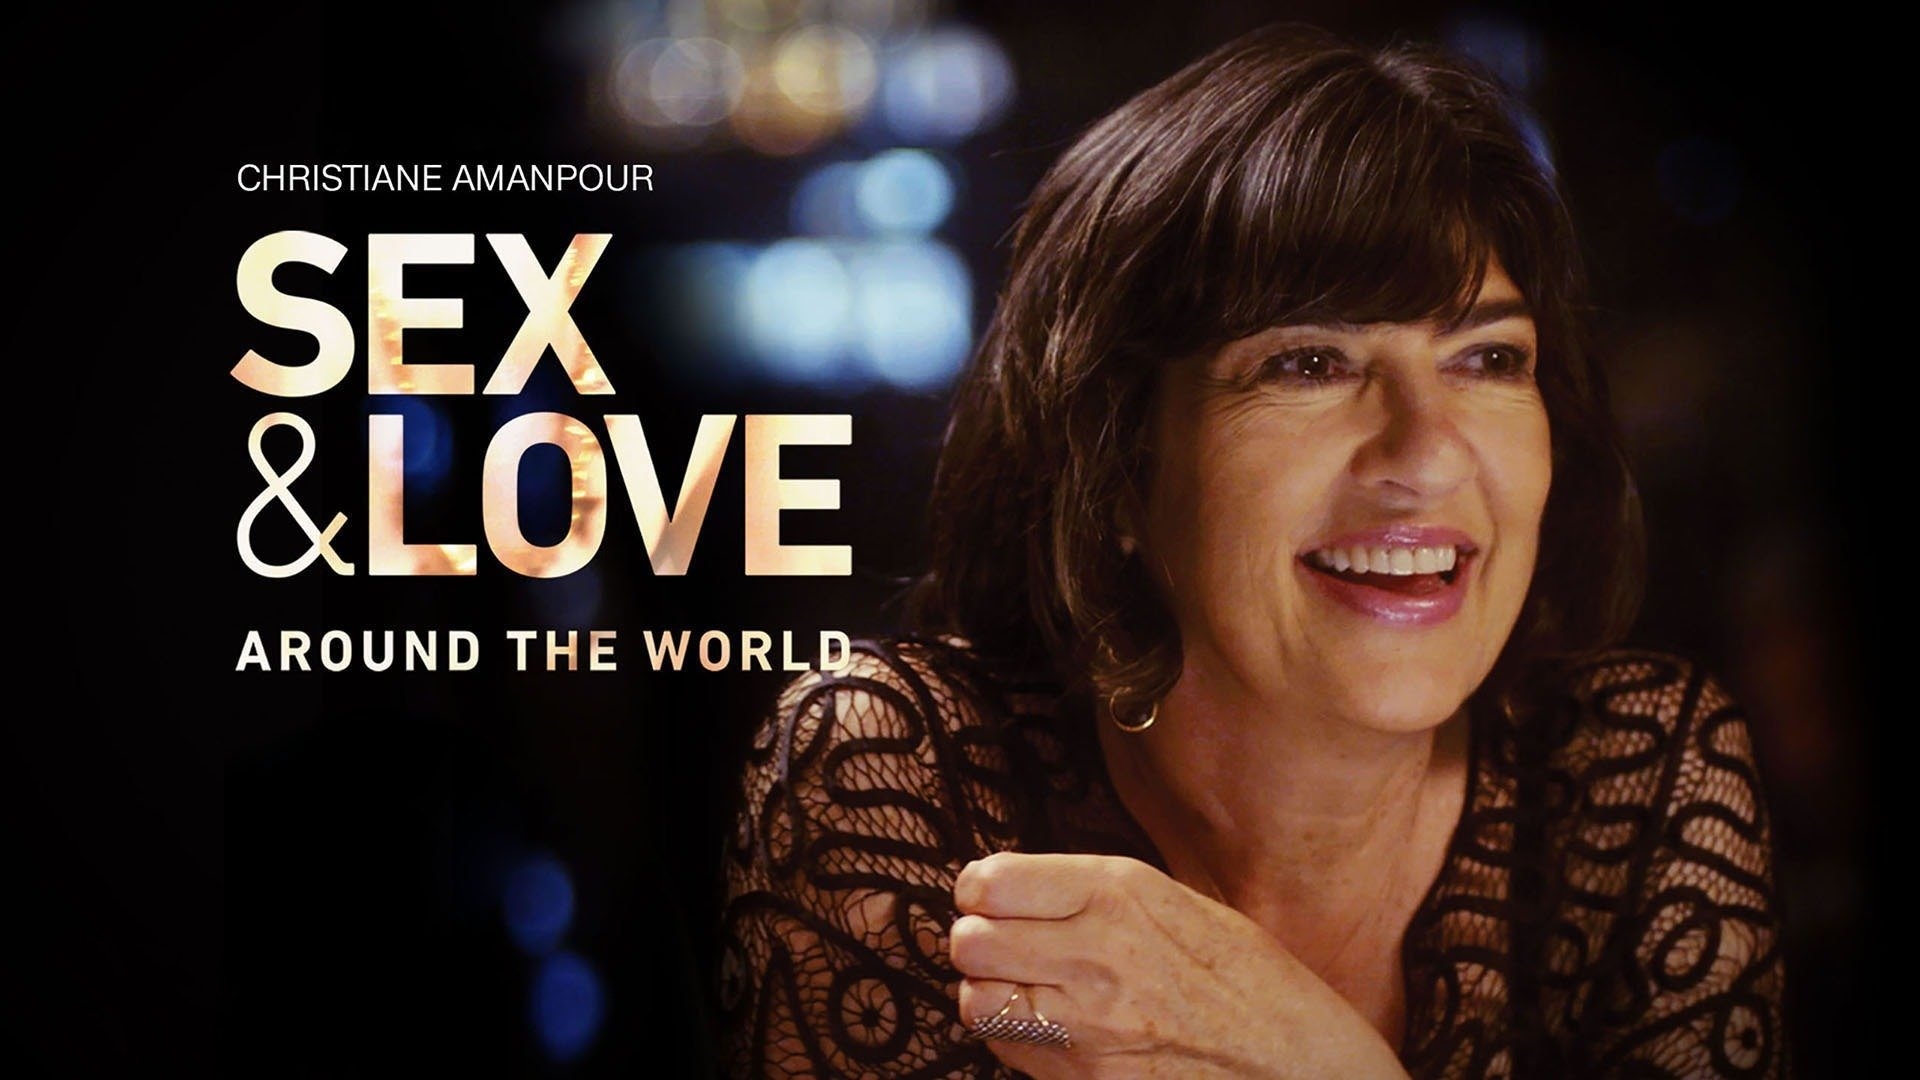 Show Christiane Amanpour: Sex & Love Around the World